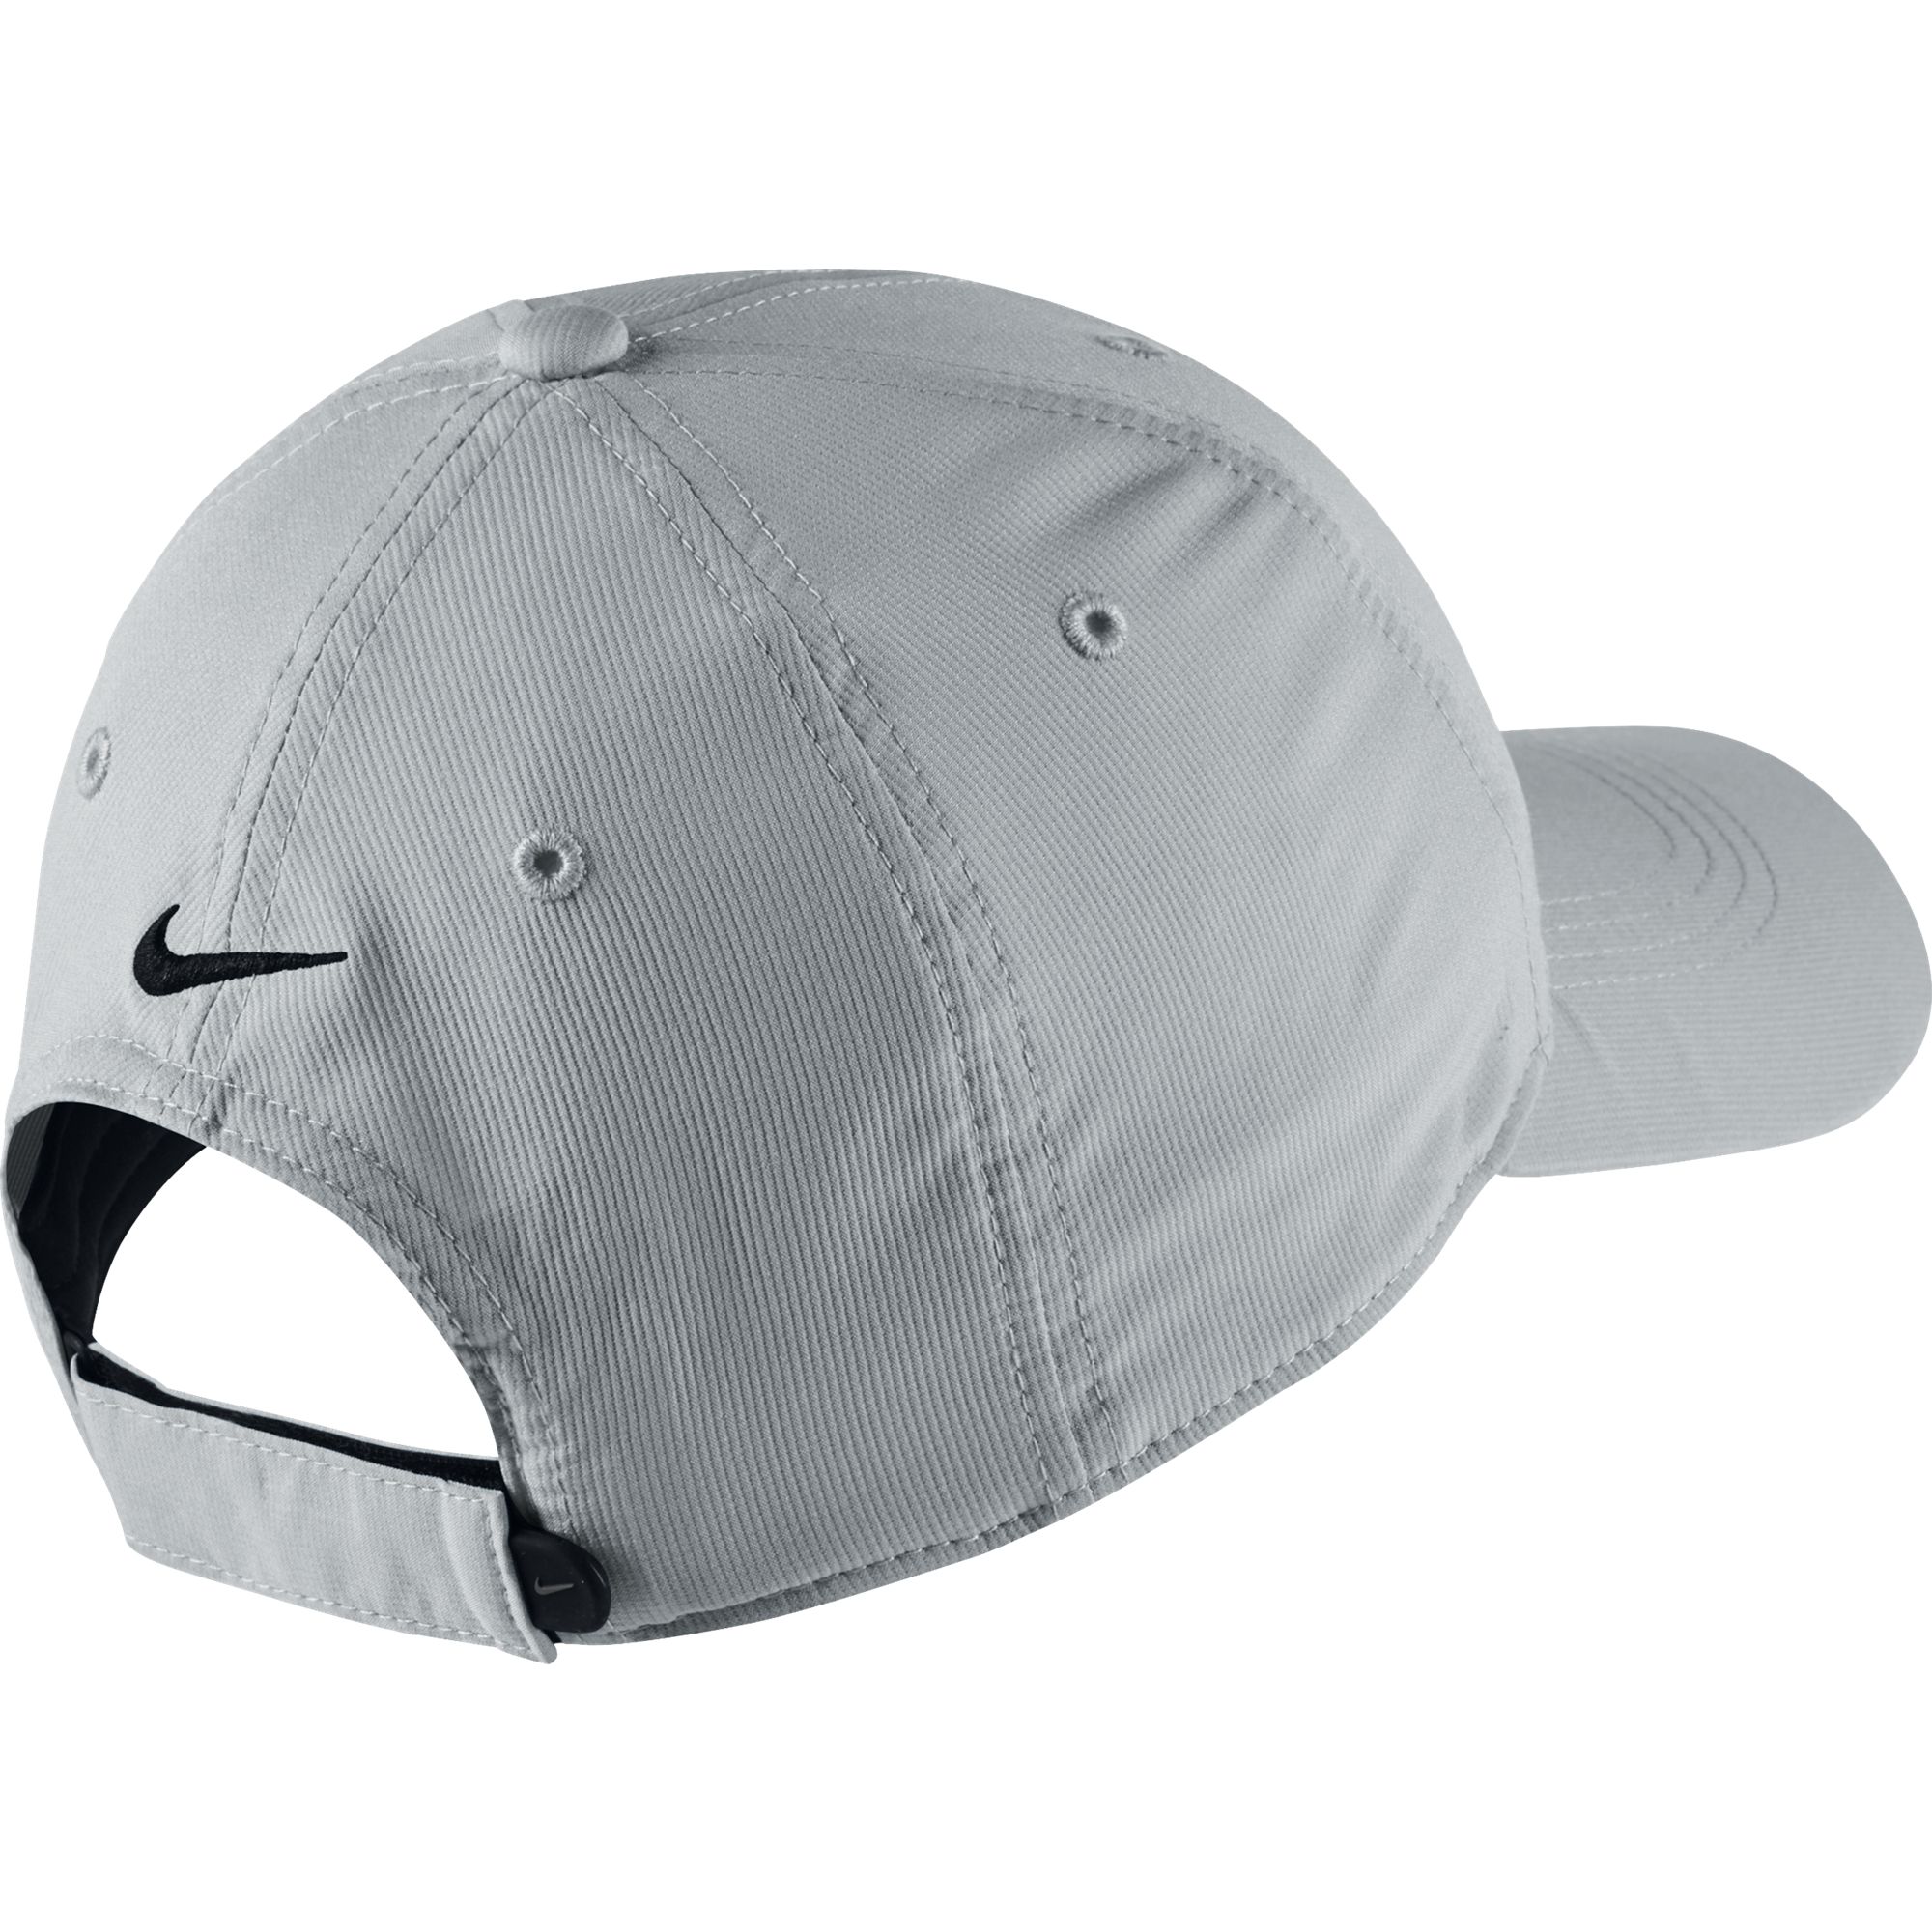 New 2016 Nike Legacy 91 Tech Adjustable Hat/Cap COLOR: Dark Grey | eBay